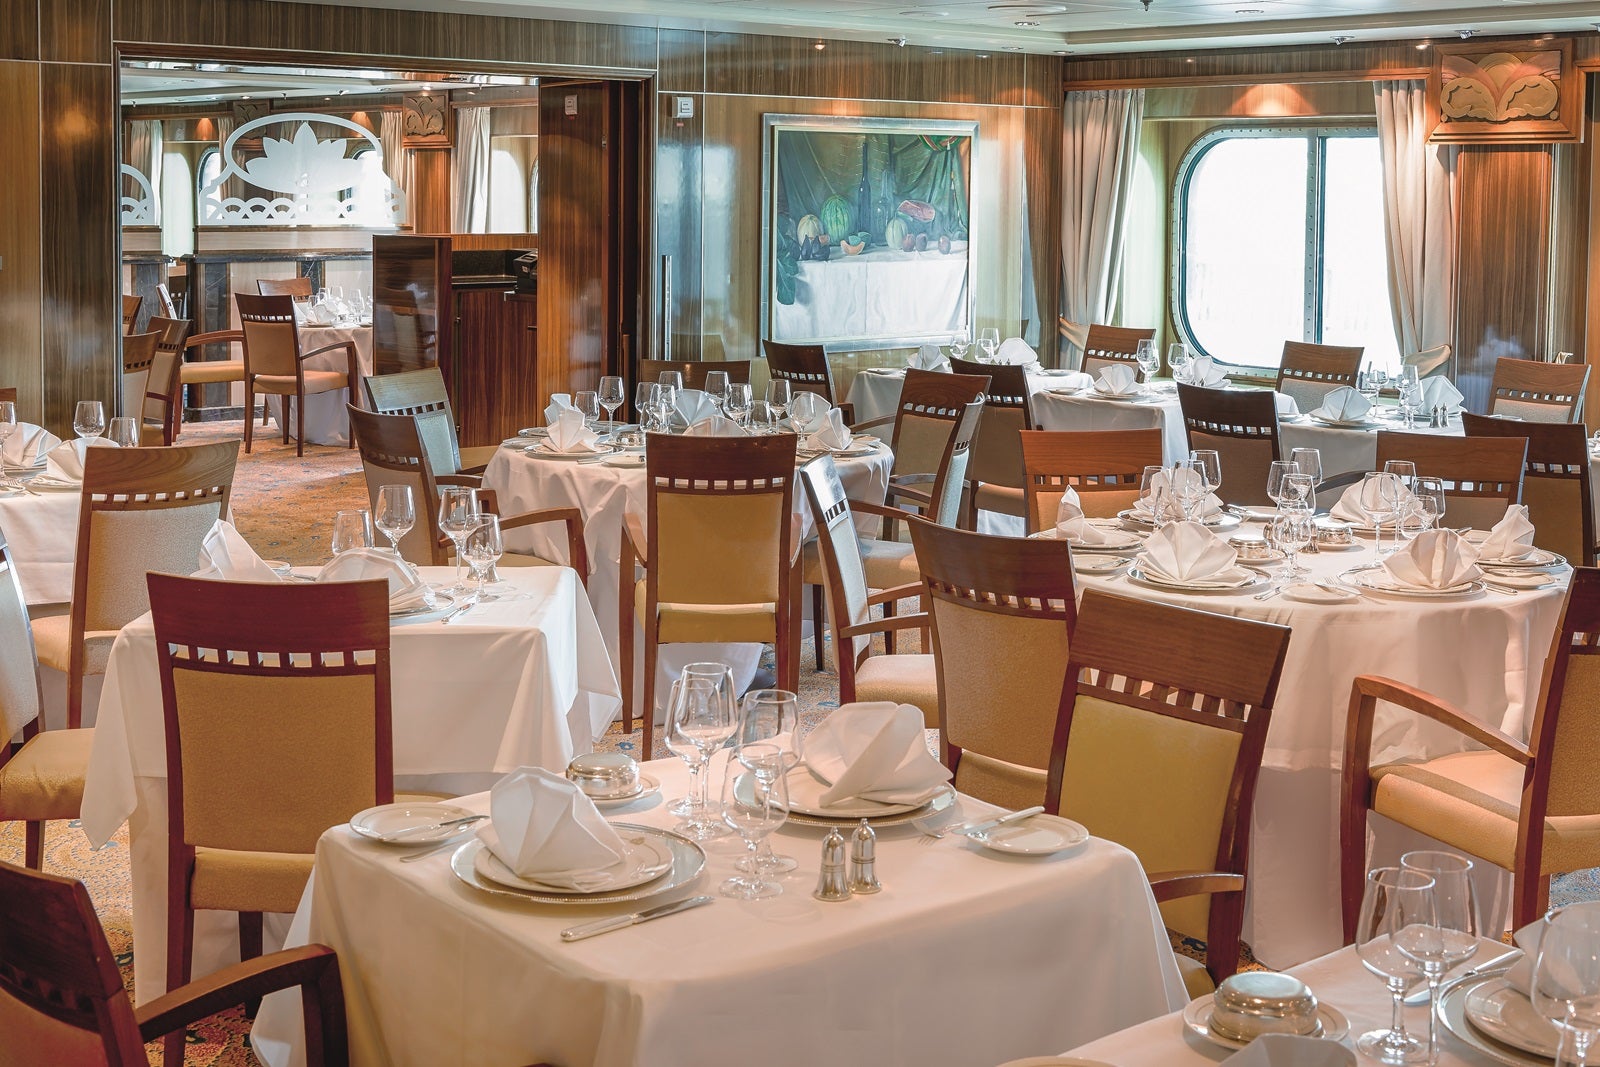 The Britannia Club Restaurant dining room on Cunard's Queen Mary 2 cruise ship